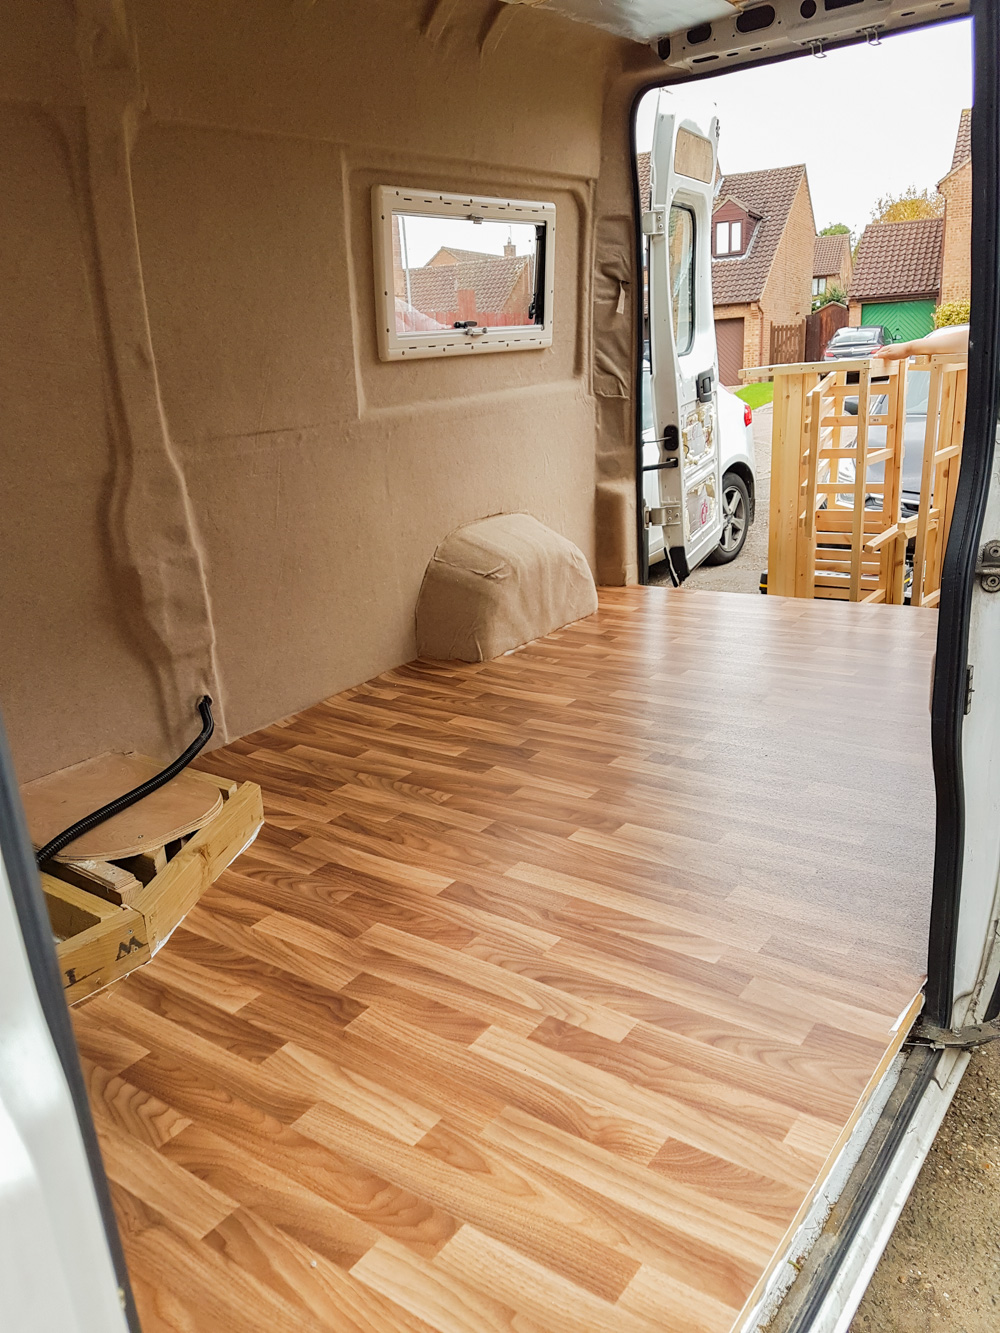 Lino floor van conversion - installing lino flooring in a campervan WIHUZFF